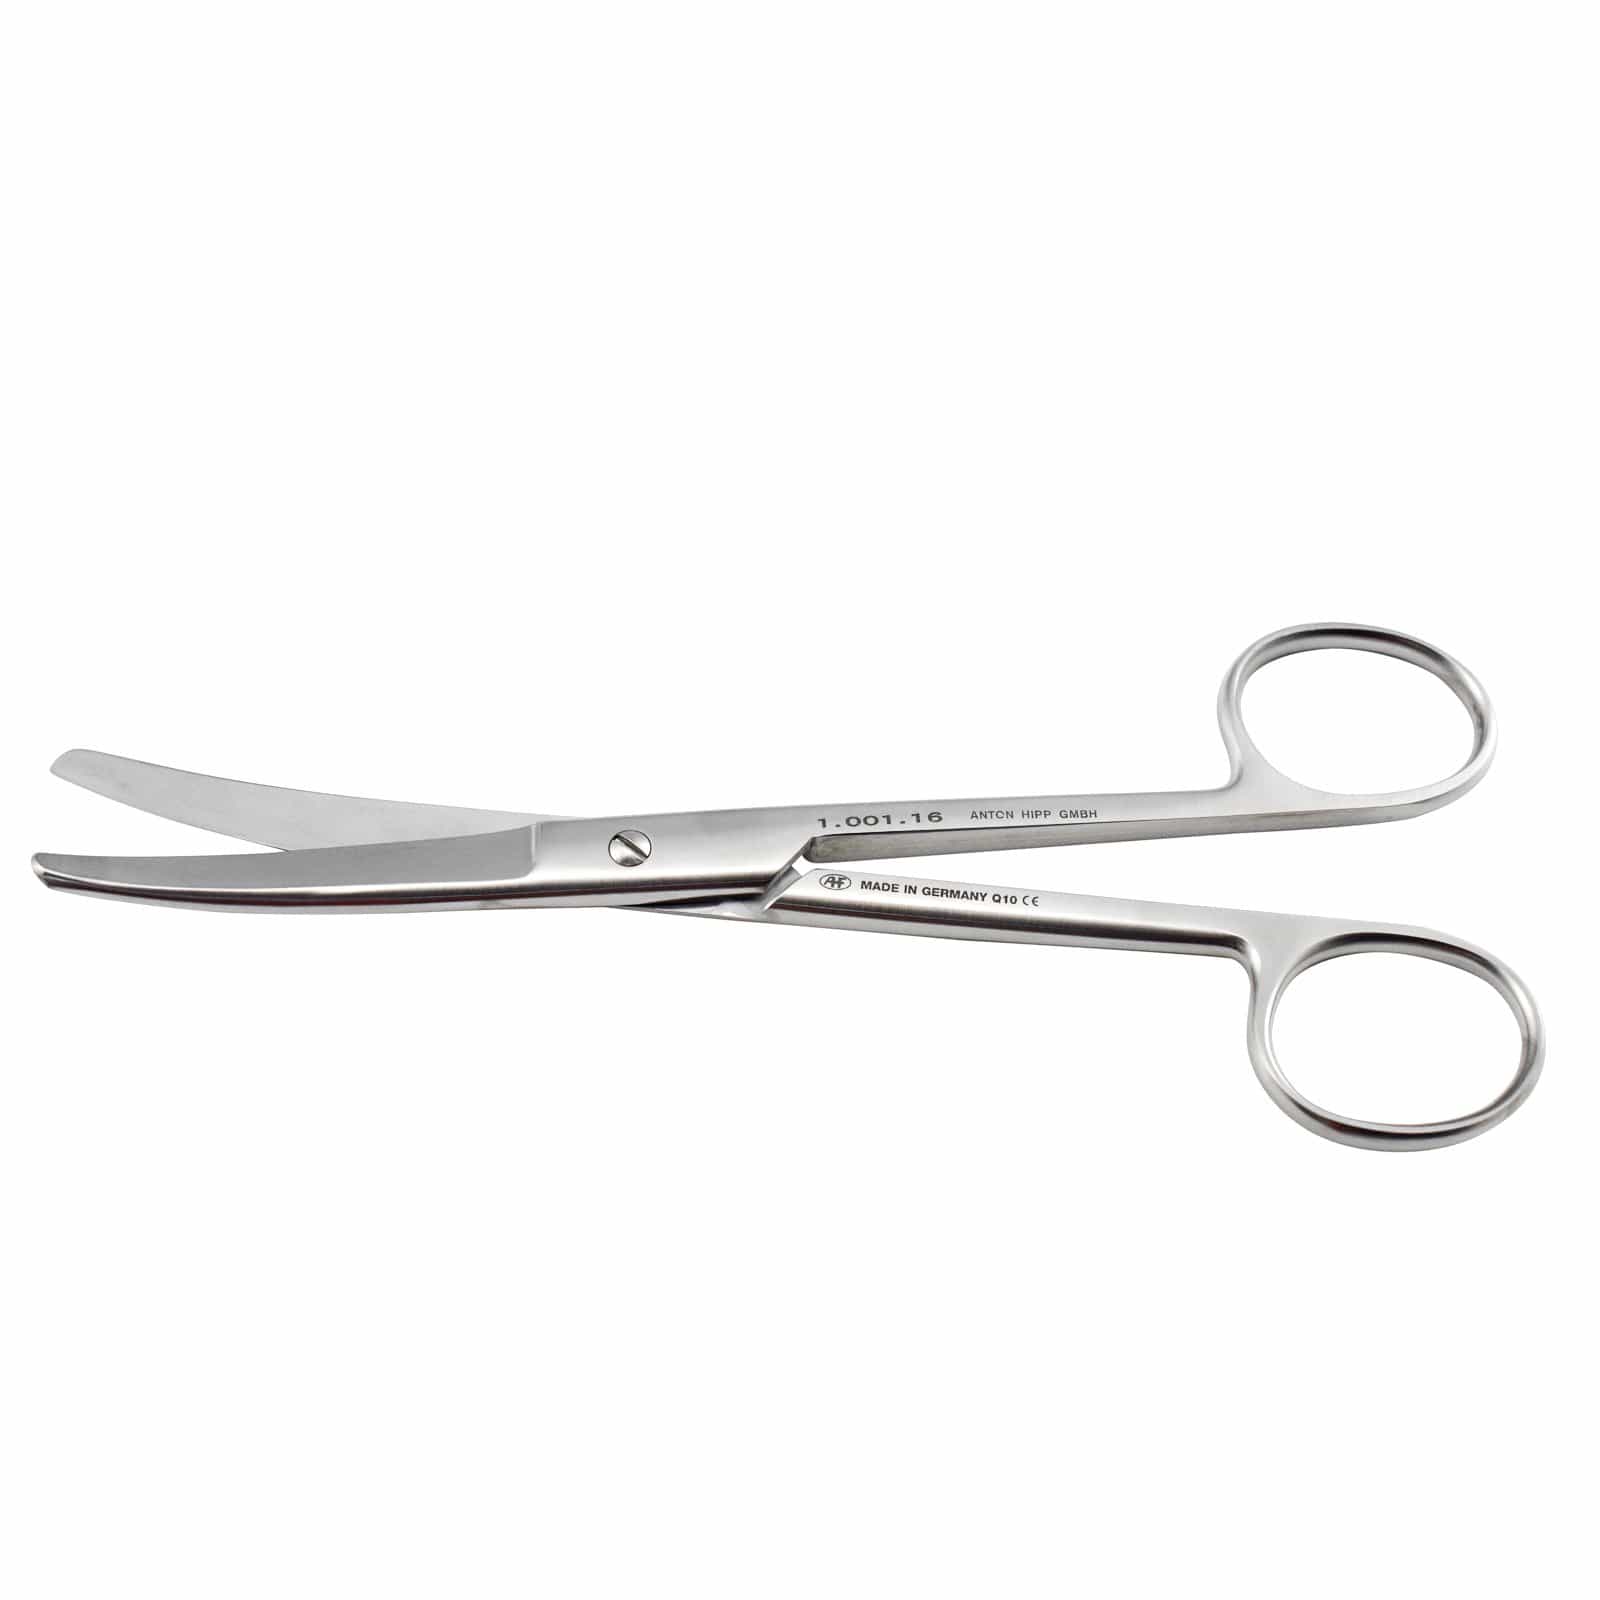 Hipp Surgical Instruments 16.5cm / Curved / Blunt/Blunt Hipp Surgical Scissors